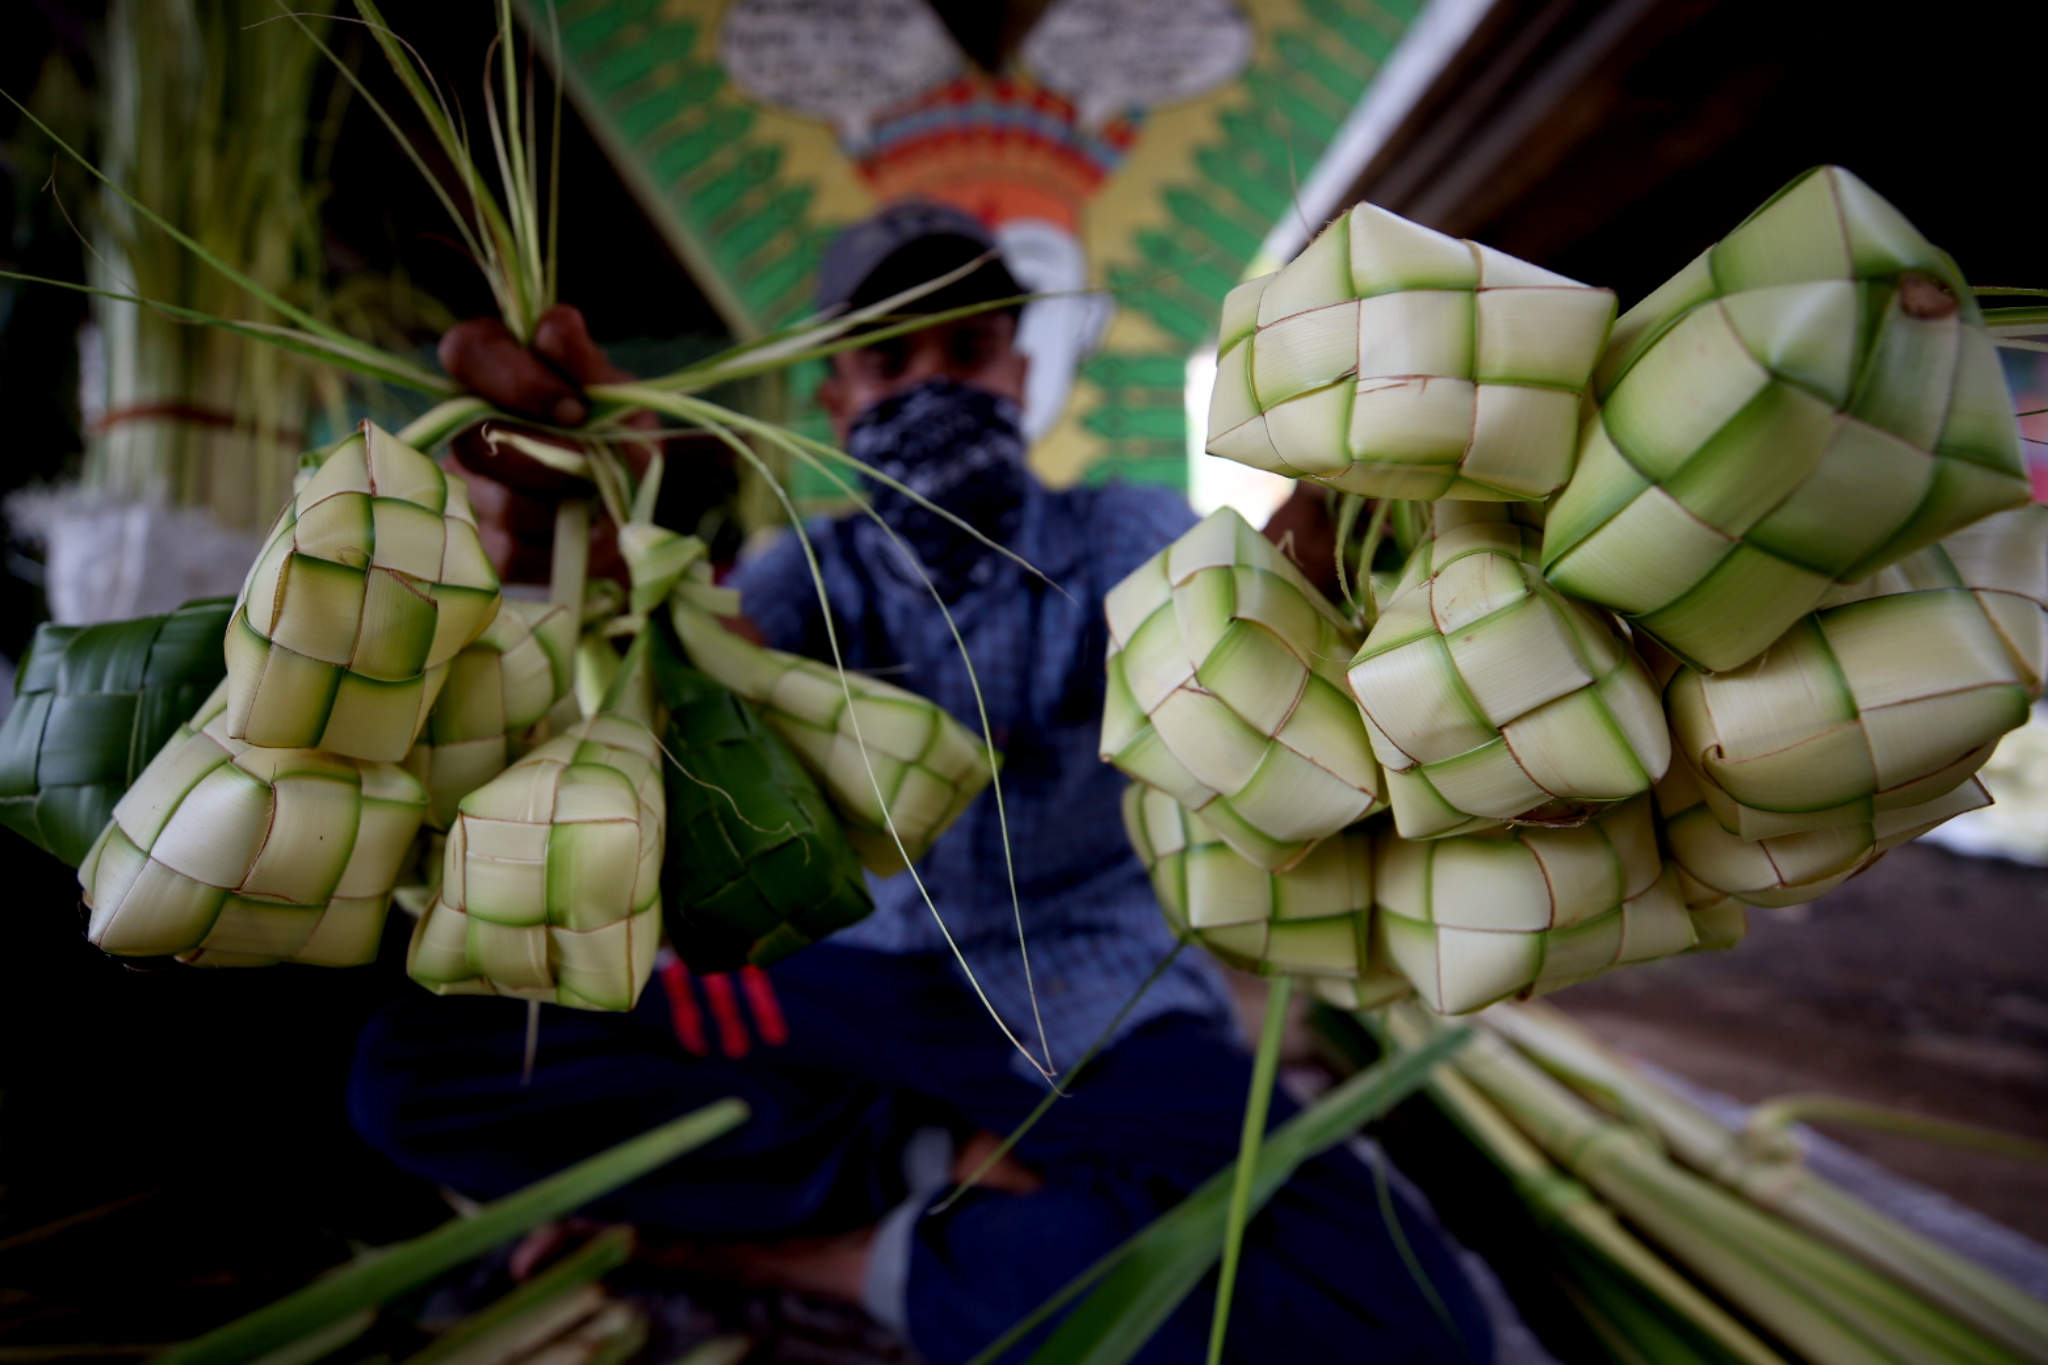 <p>Pedagang kulit ketupat musiman menggelar dagangannya di kawasan Pesanggerahan, Jakarta Selatan, Senin, 10 Mei 2021. Foto: Ismail Pohan/TrenAsia</p>
